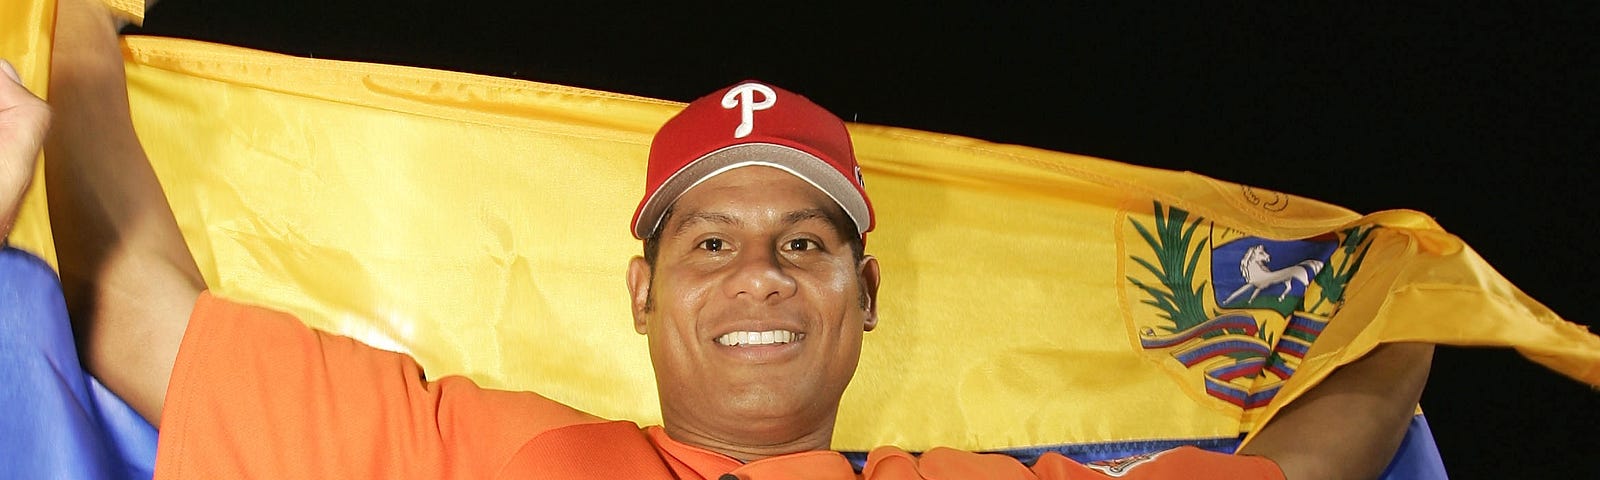 Ryan Howard of the Philadelphia Phillies smiles whie holding a